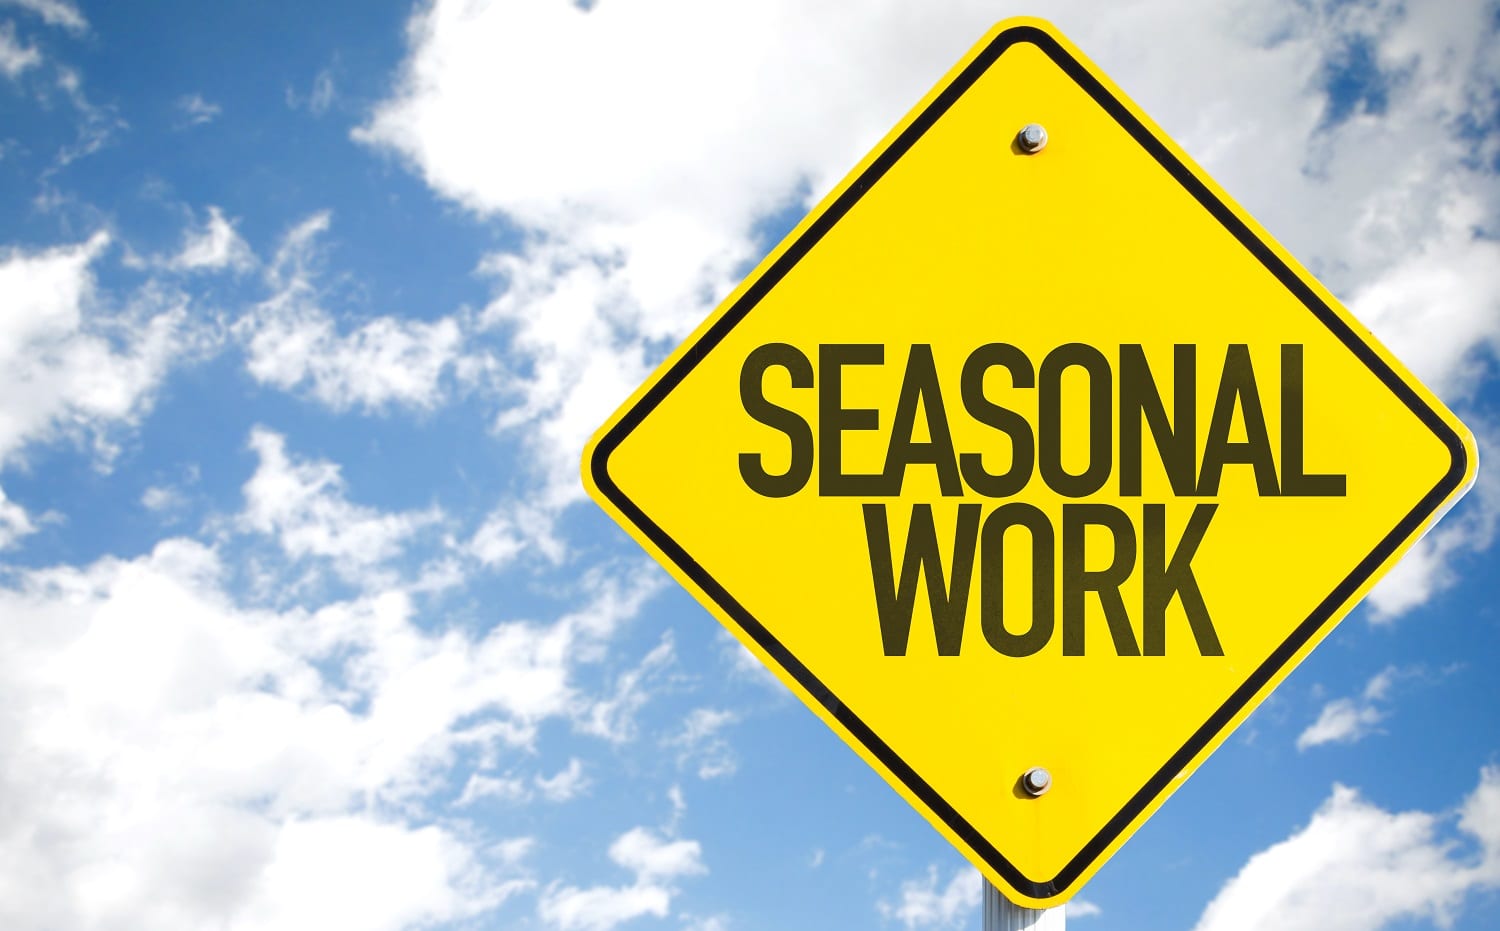 Seasonal-work-sign